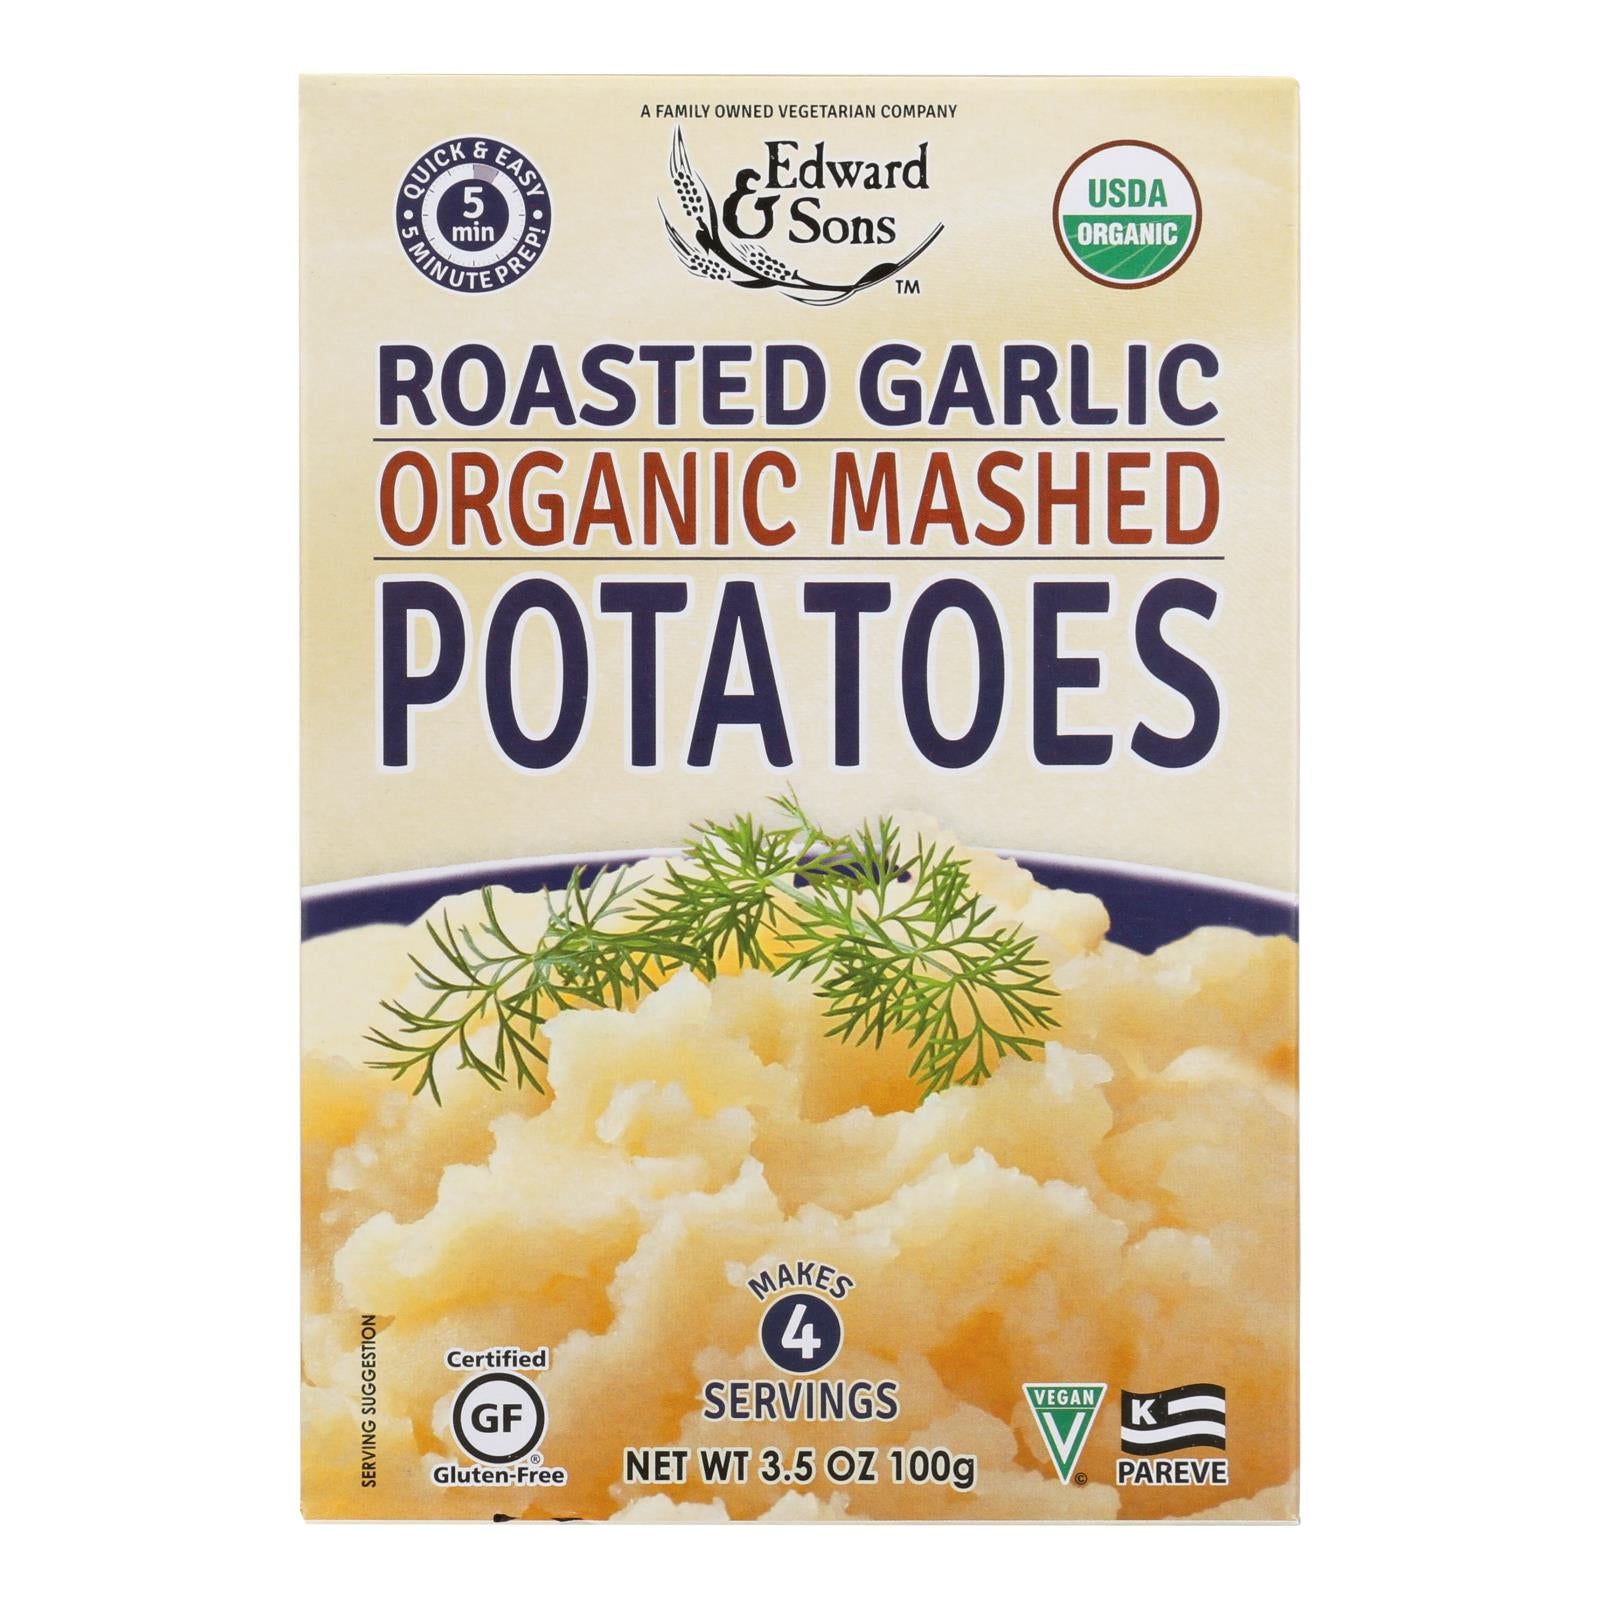 Edward And Sons Organic Mashed Potatoes - Roasted Garlic - Case Of 6 - 3.5 Oz. - Whole Green Foods